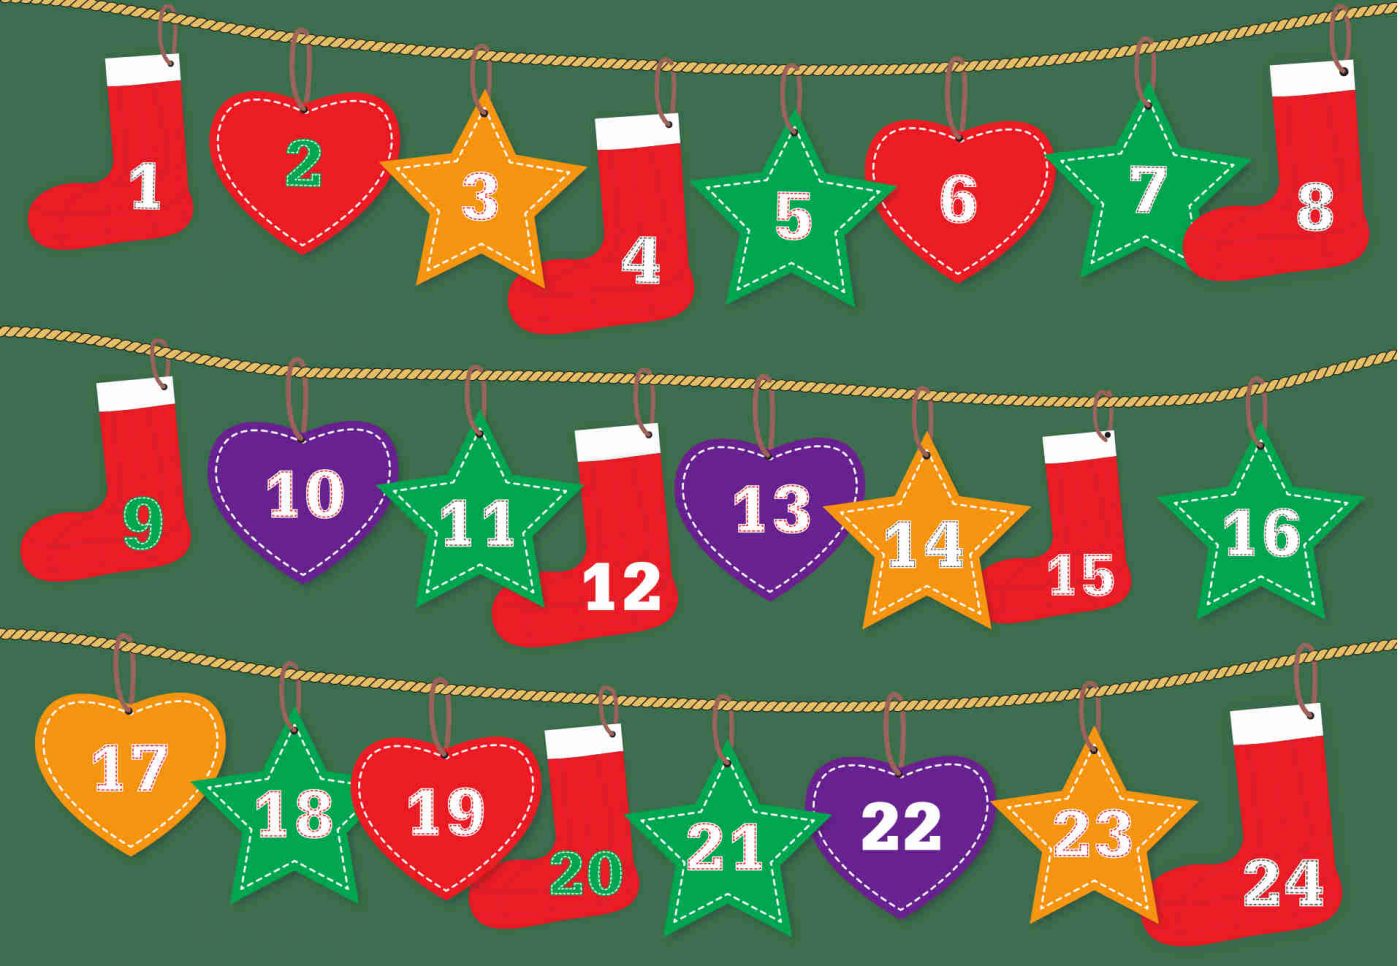 Adventstimmung trotz Social Distancings sollen die digitalen Adventkalender bringen. Foto: pixabay